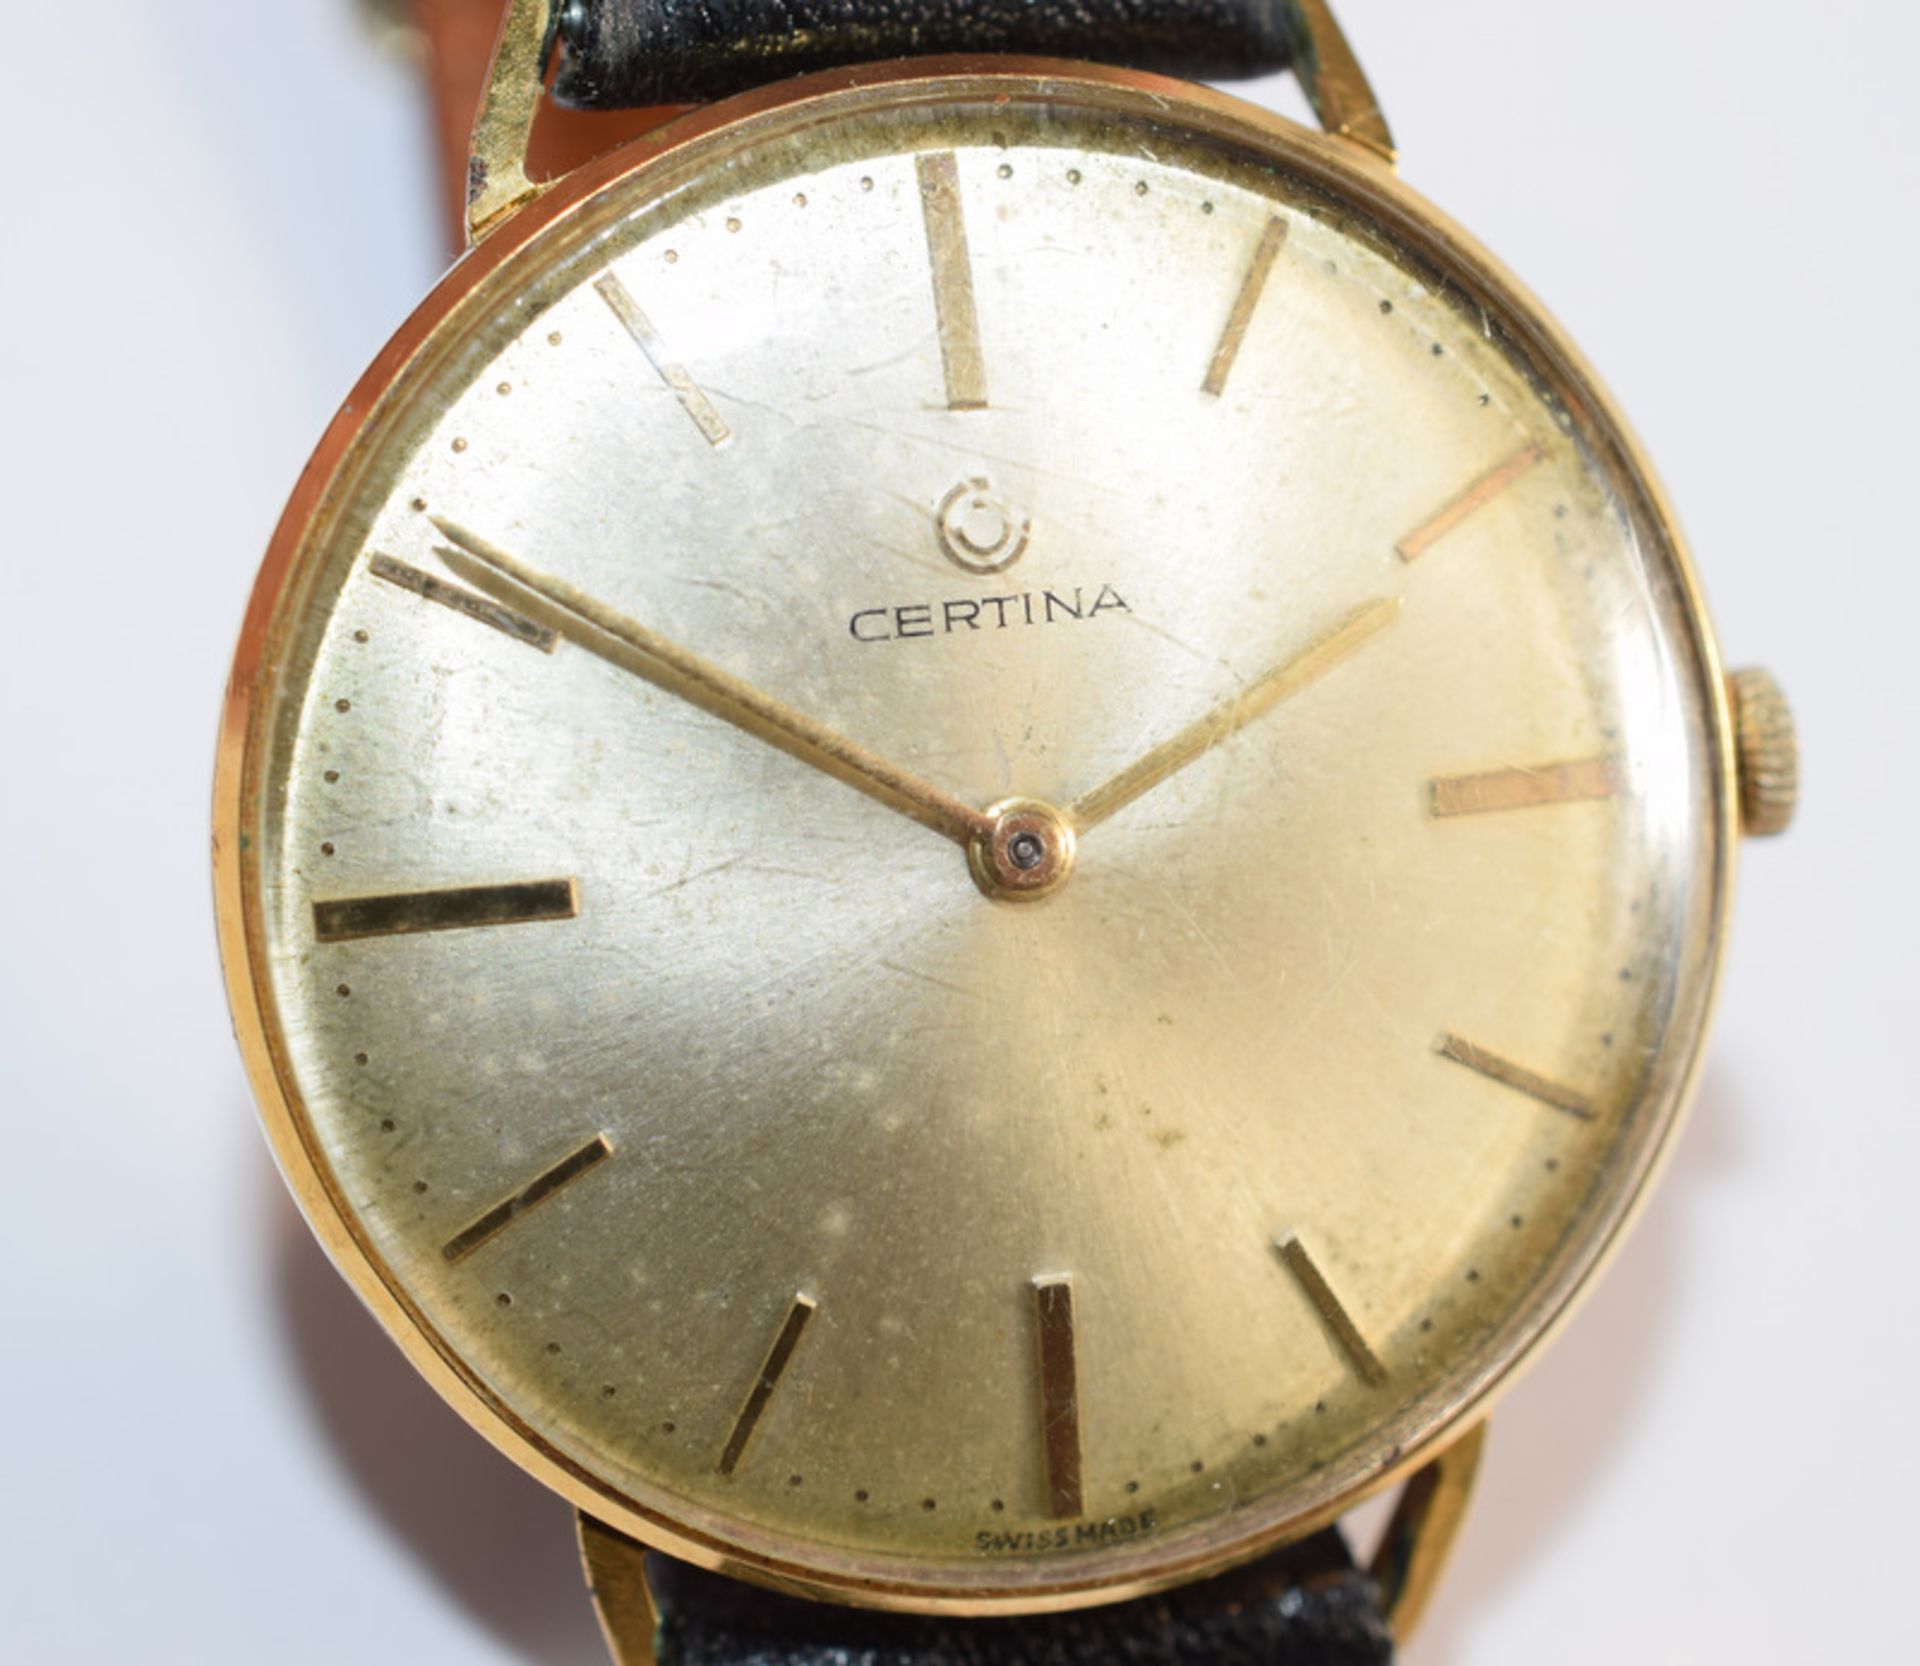 Certina GP Gents Wristwatch - Image 2 of 4